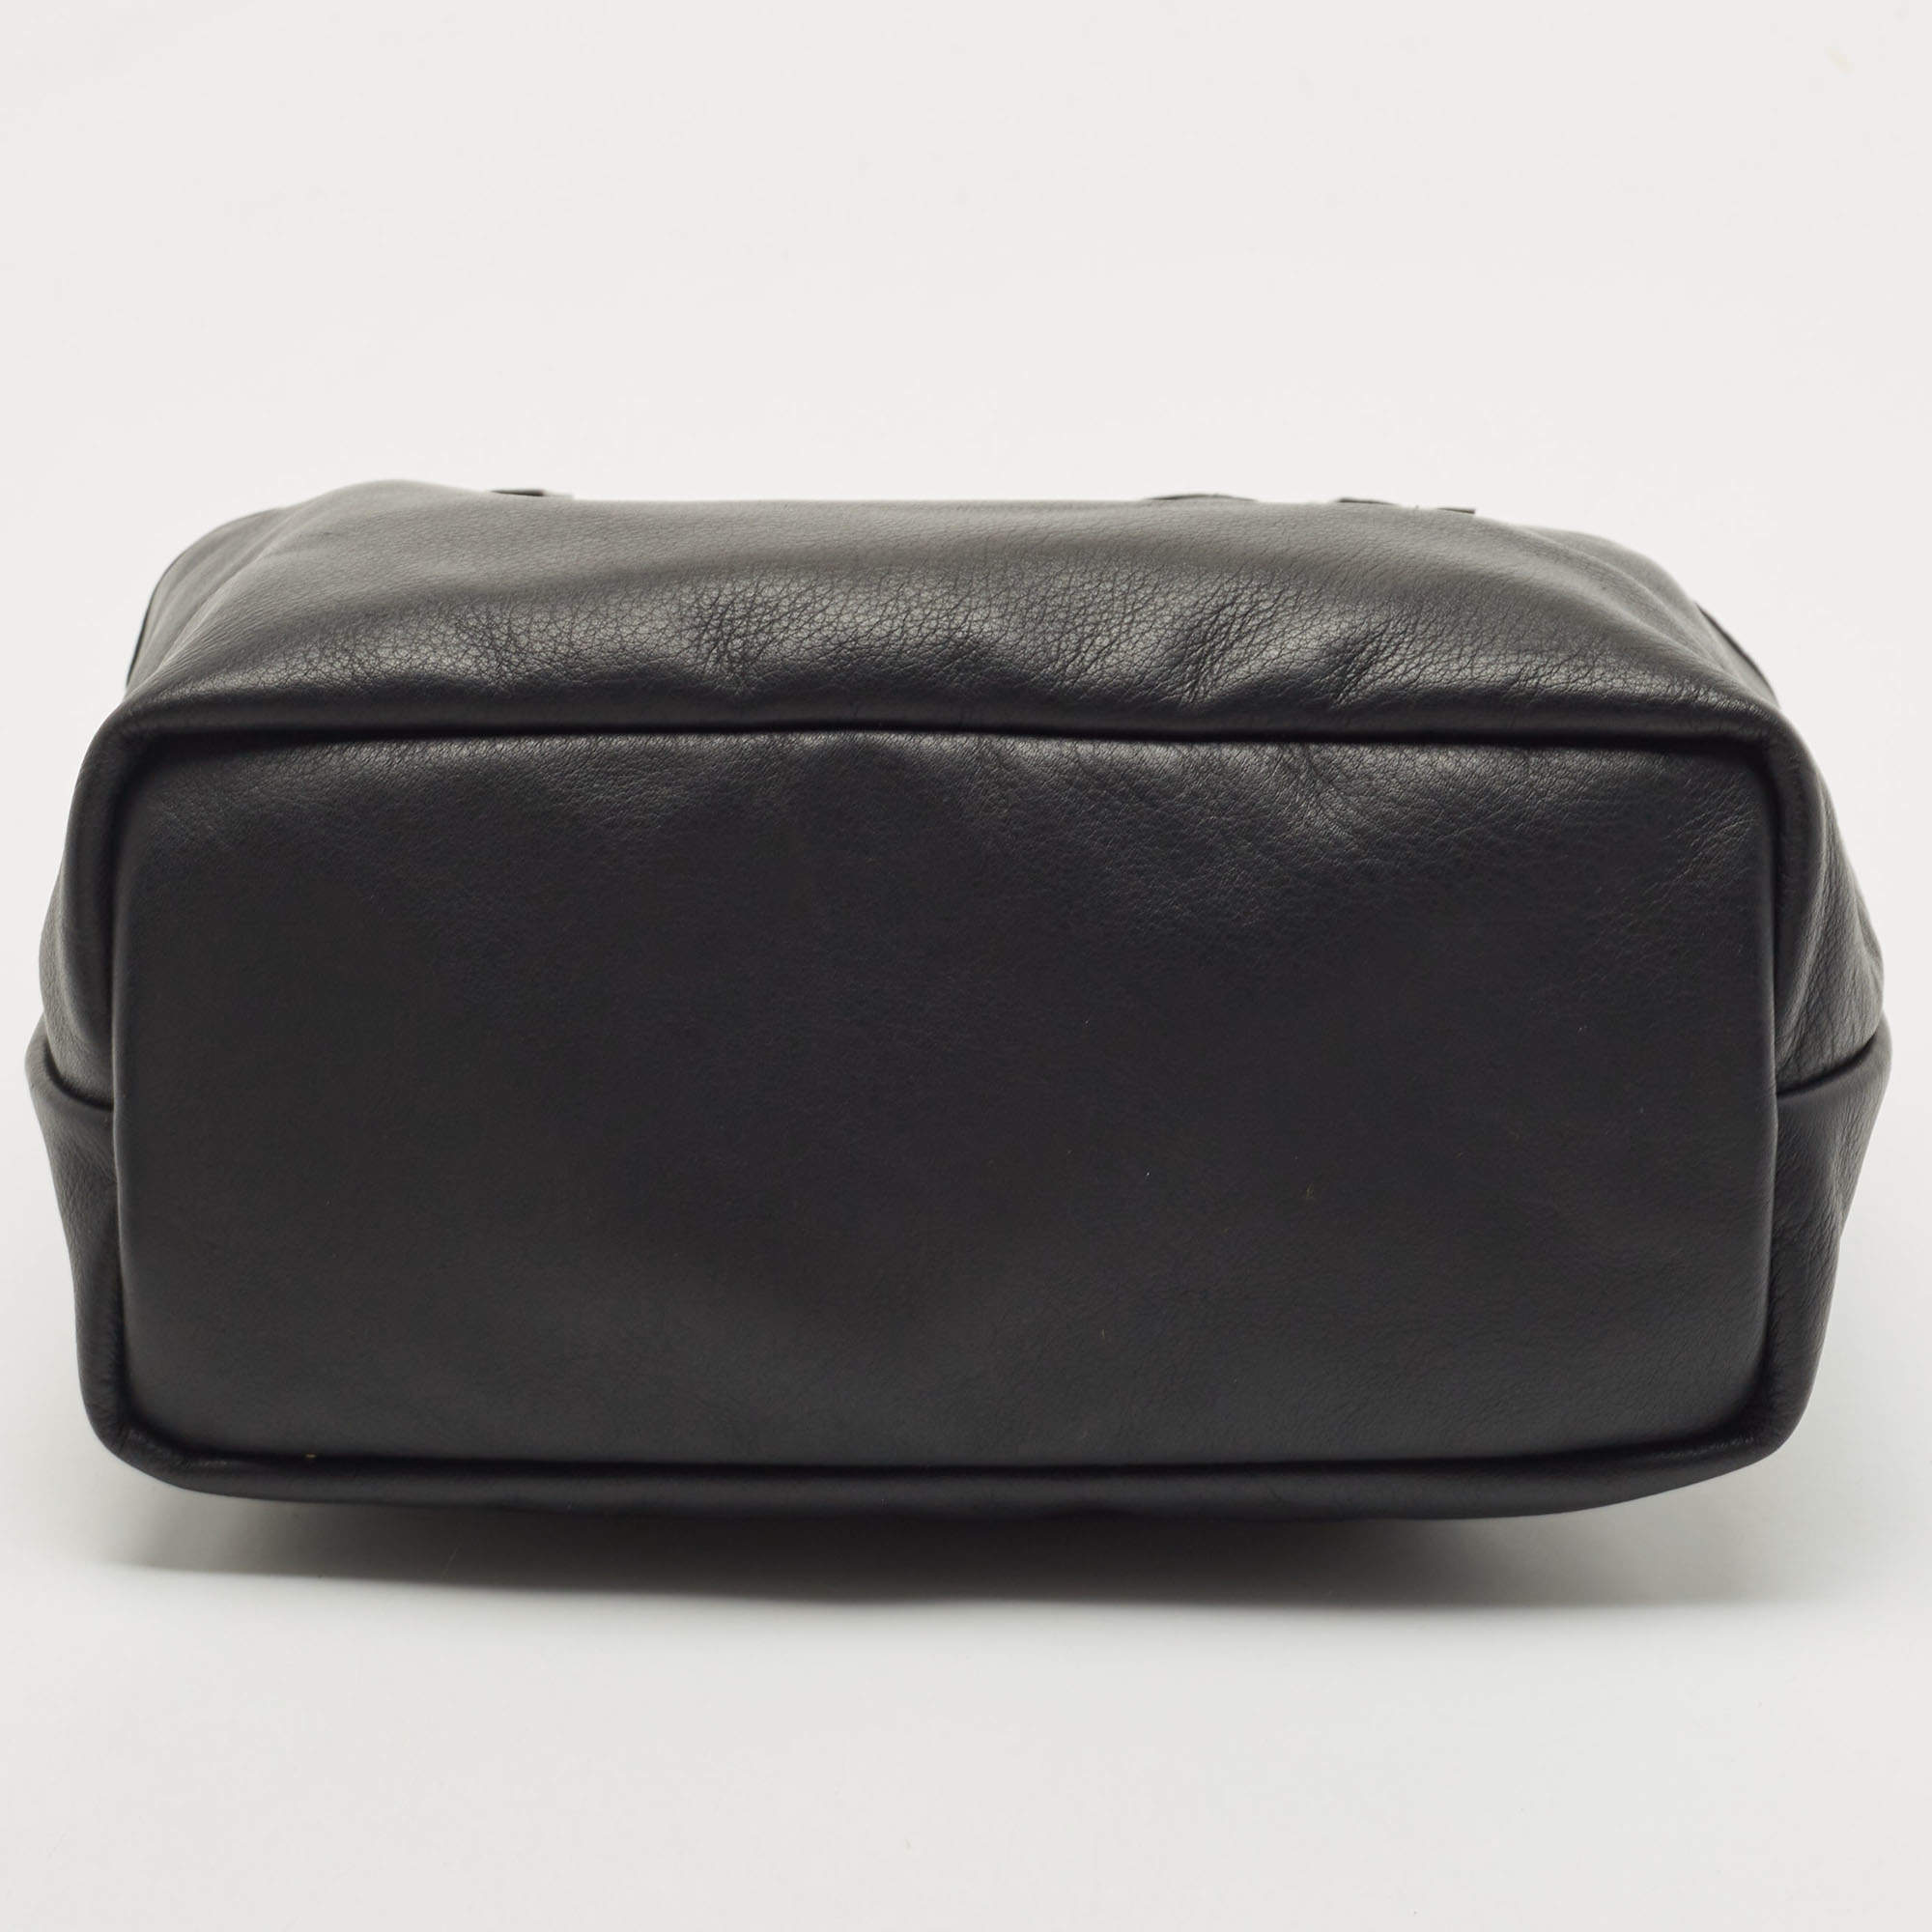 Goyard Goyardine Anjou Mini Tote w/Pouch - Black Totes, Handbags - GOY36687